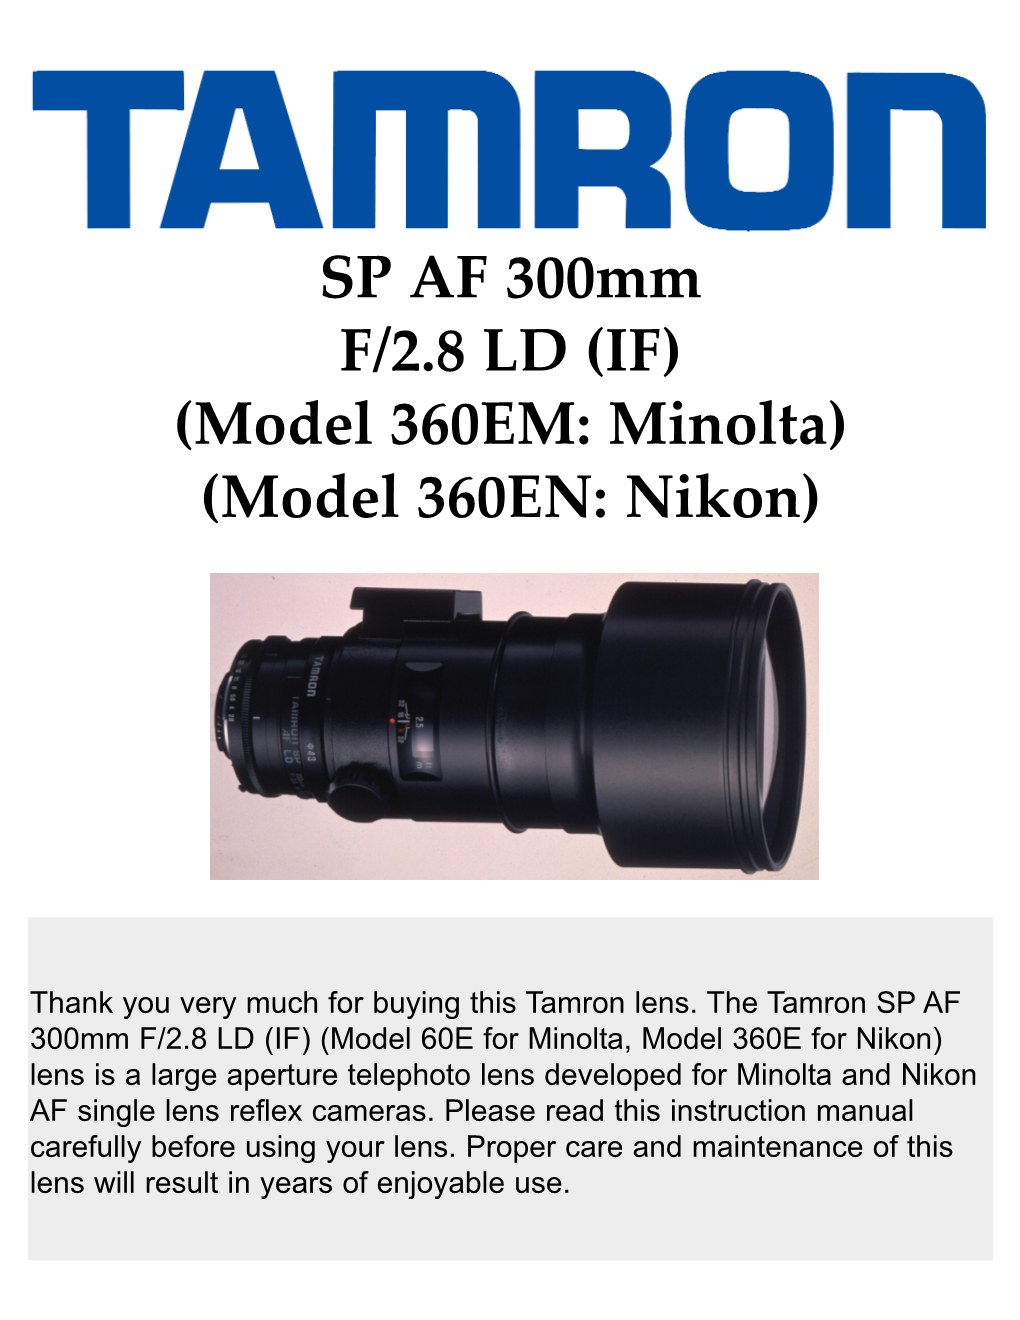 SP AF 300Mm F/2.8 LD (IF) (Model 360EM: Minolta) (Model 360EN: Nikon)